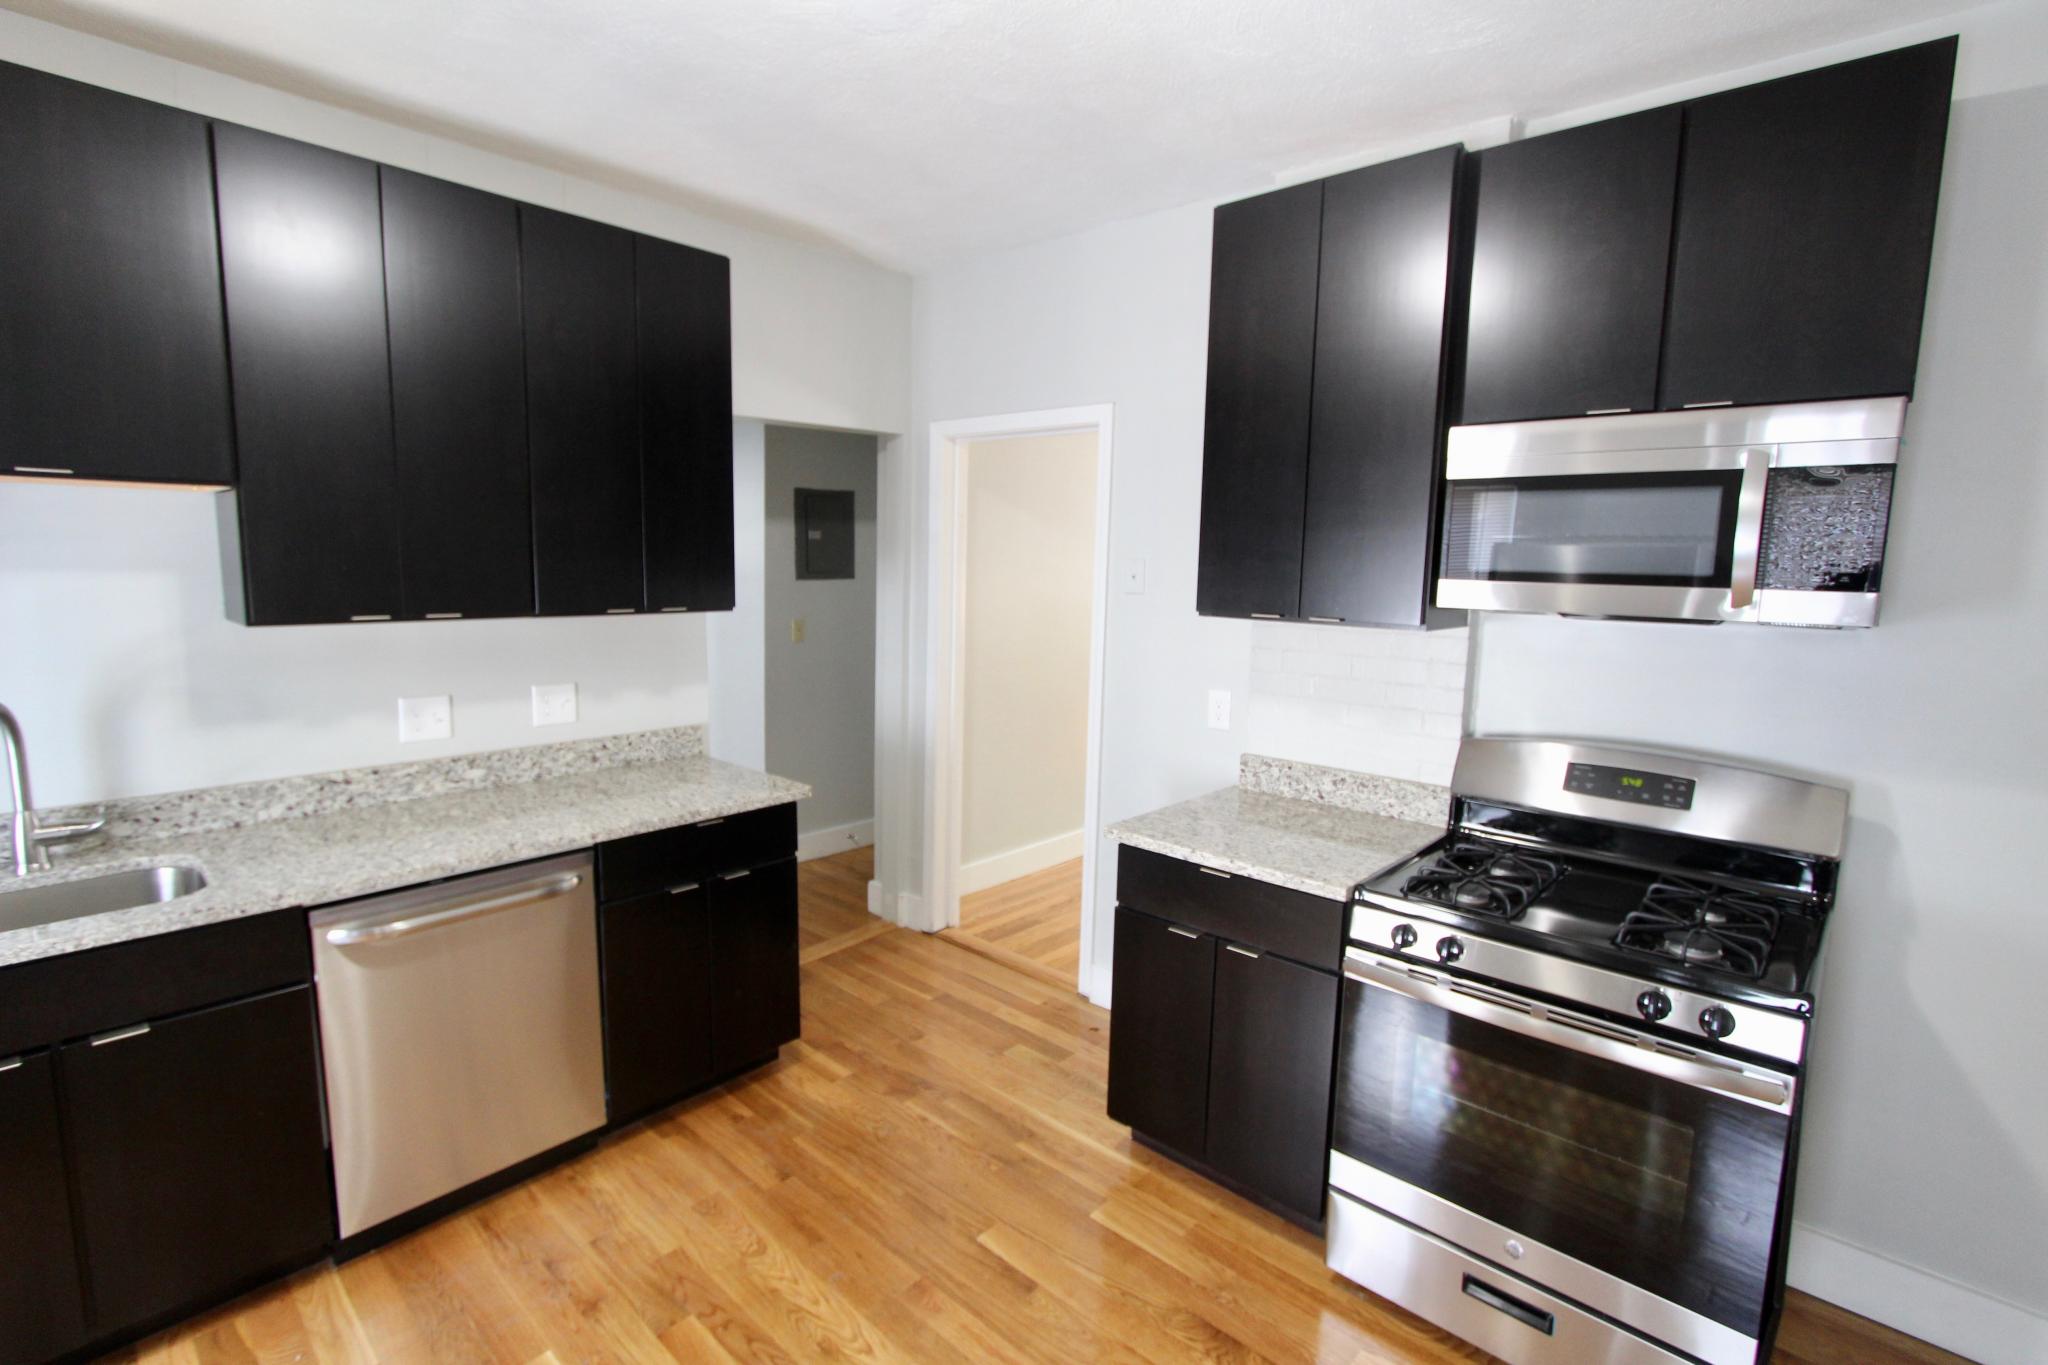 Photos of apartment on Pleasant St.,Boston MA 02125